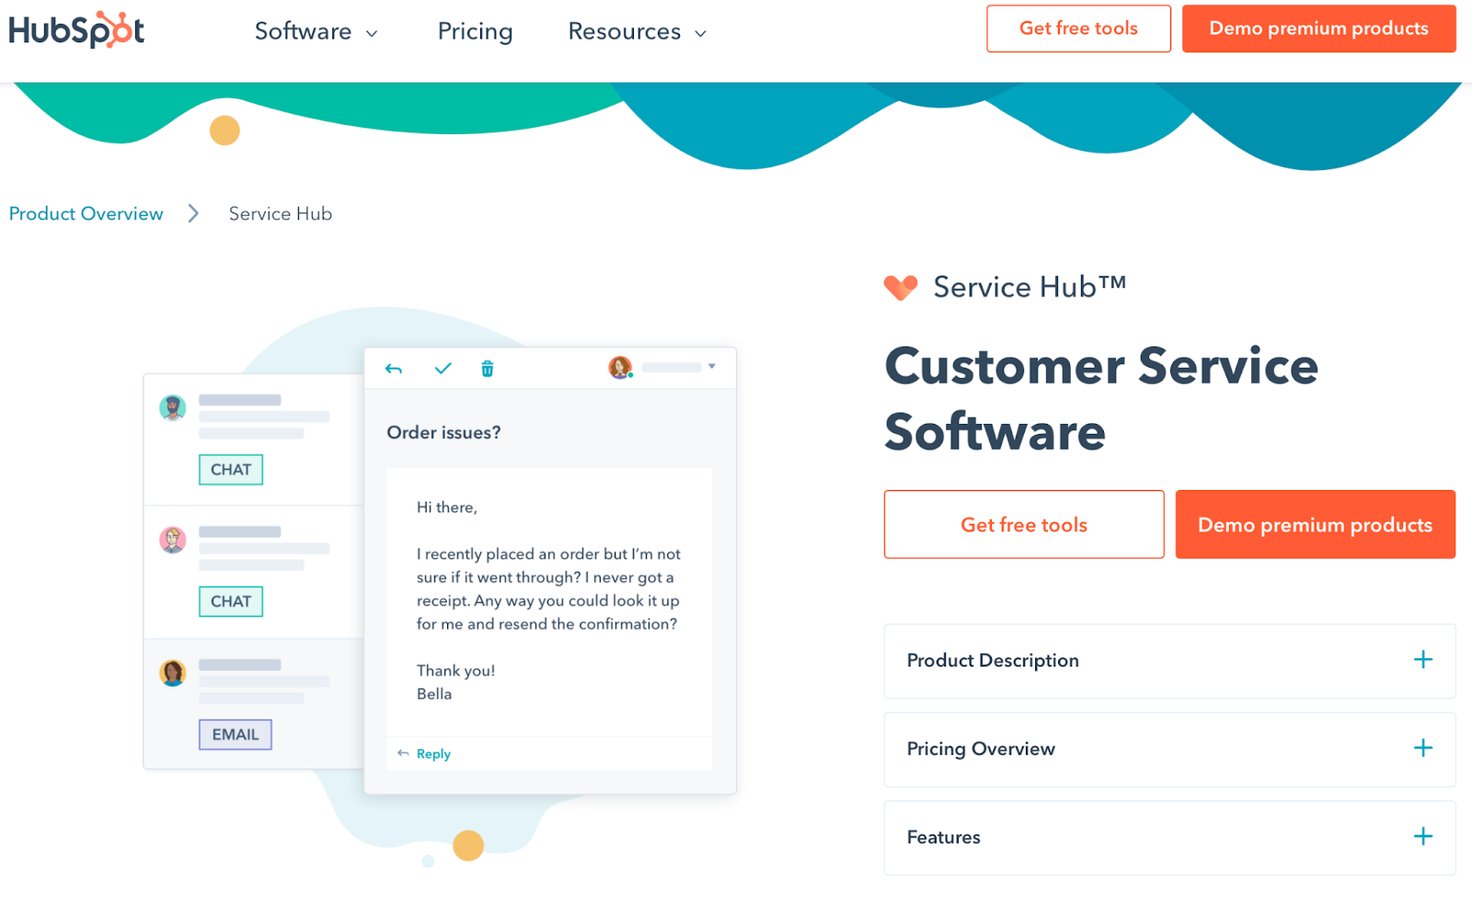 HubSpot Service Hub homepage: Customer Service Software